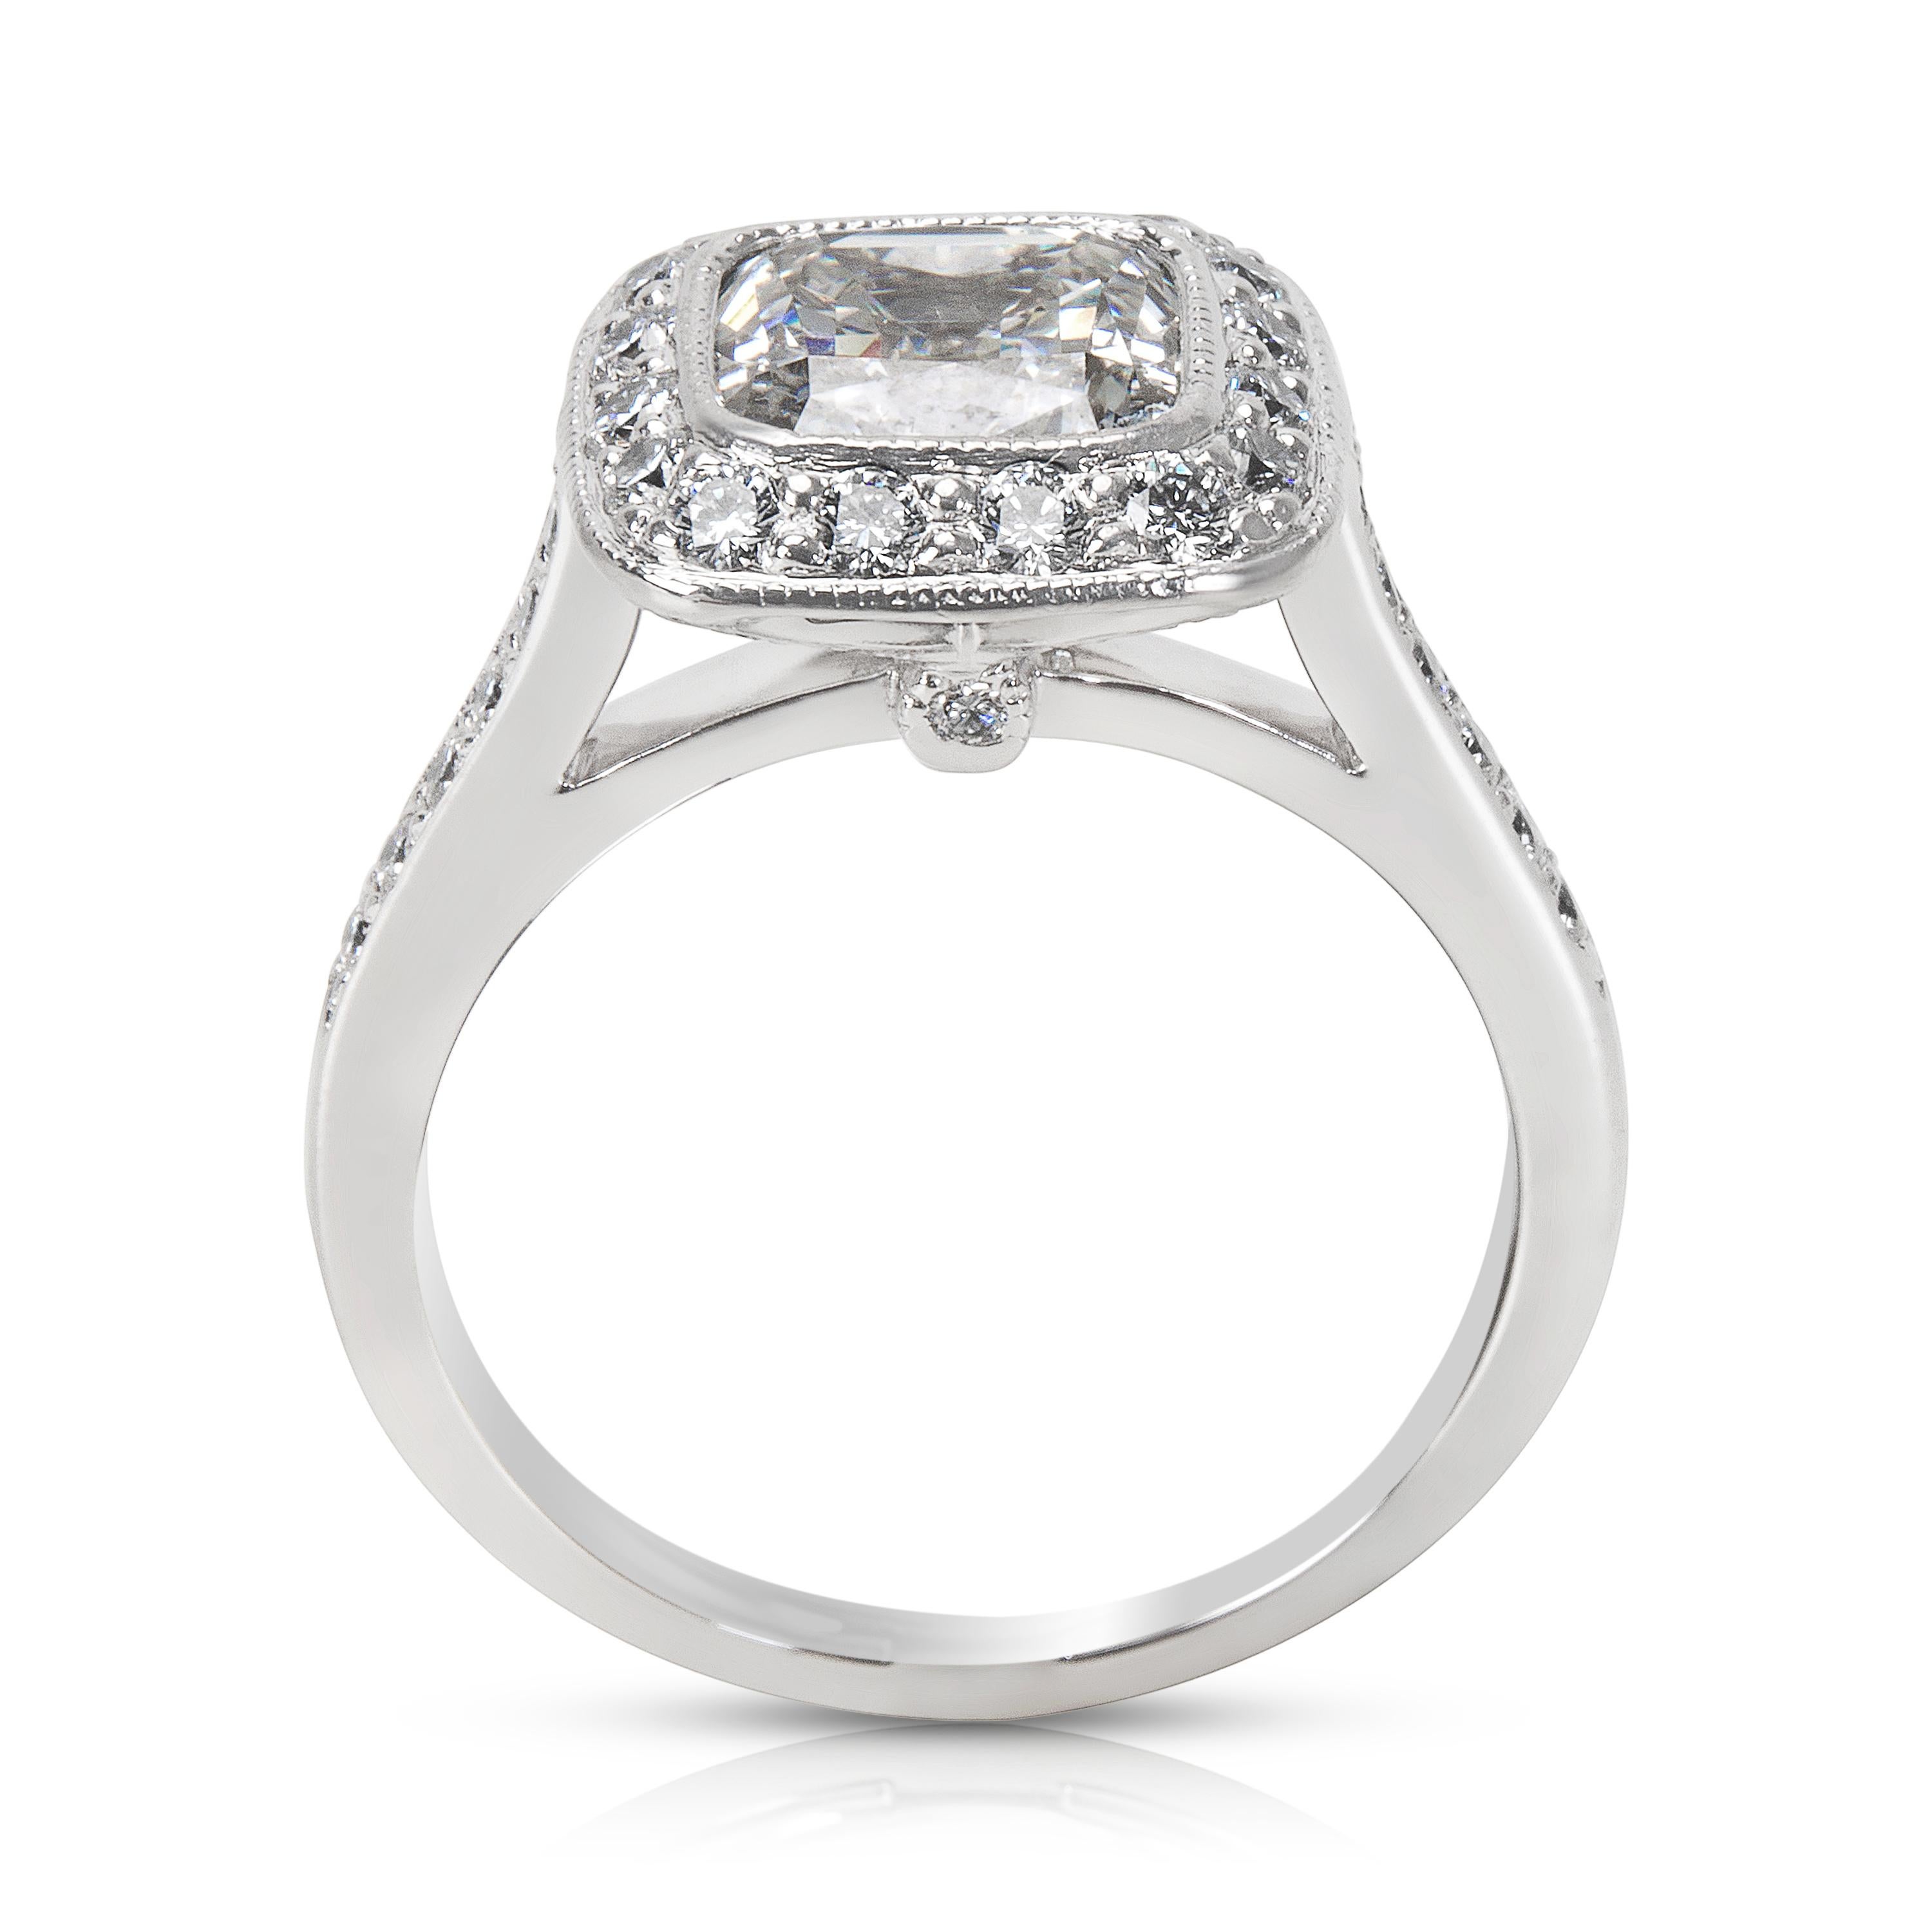 Modern Tiffany & Co. Legacy Diamond Engagement Ring in Platinum 2.19 Carat